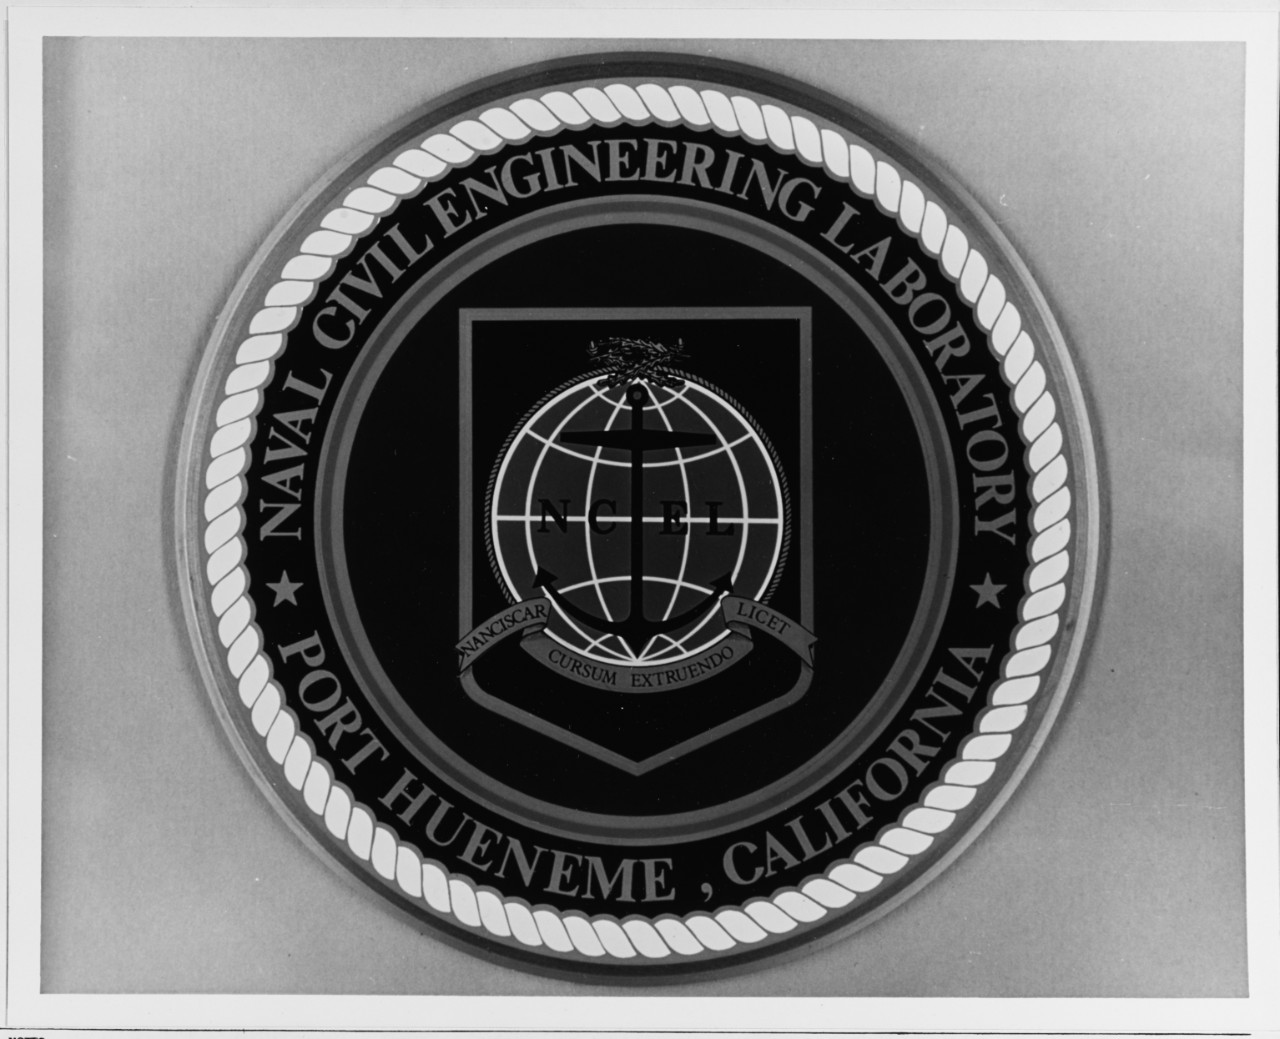 Insignia:  U.S. Naval Civil Engineering Laboratory, Port Hueneme, California